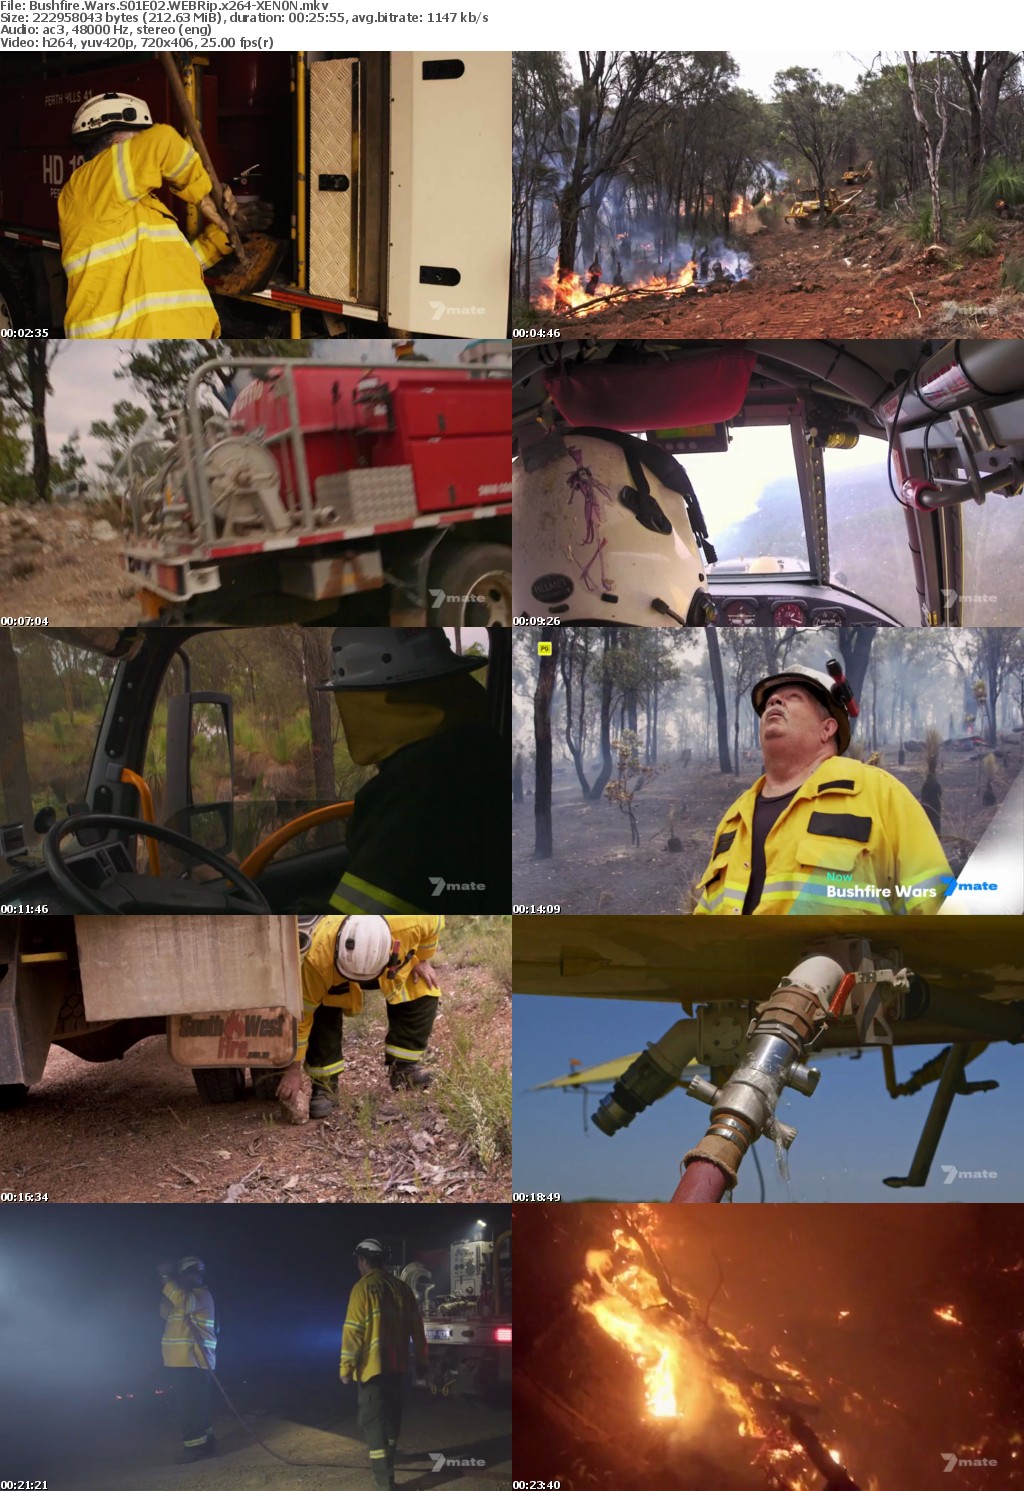 Bushfire Wars S01E02 WEBRip x264-XEN0N